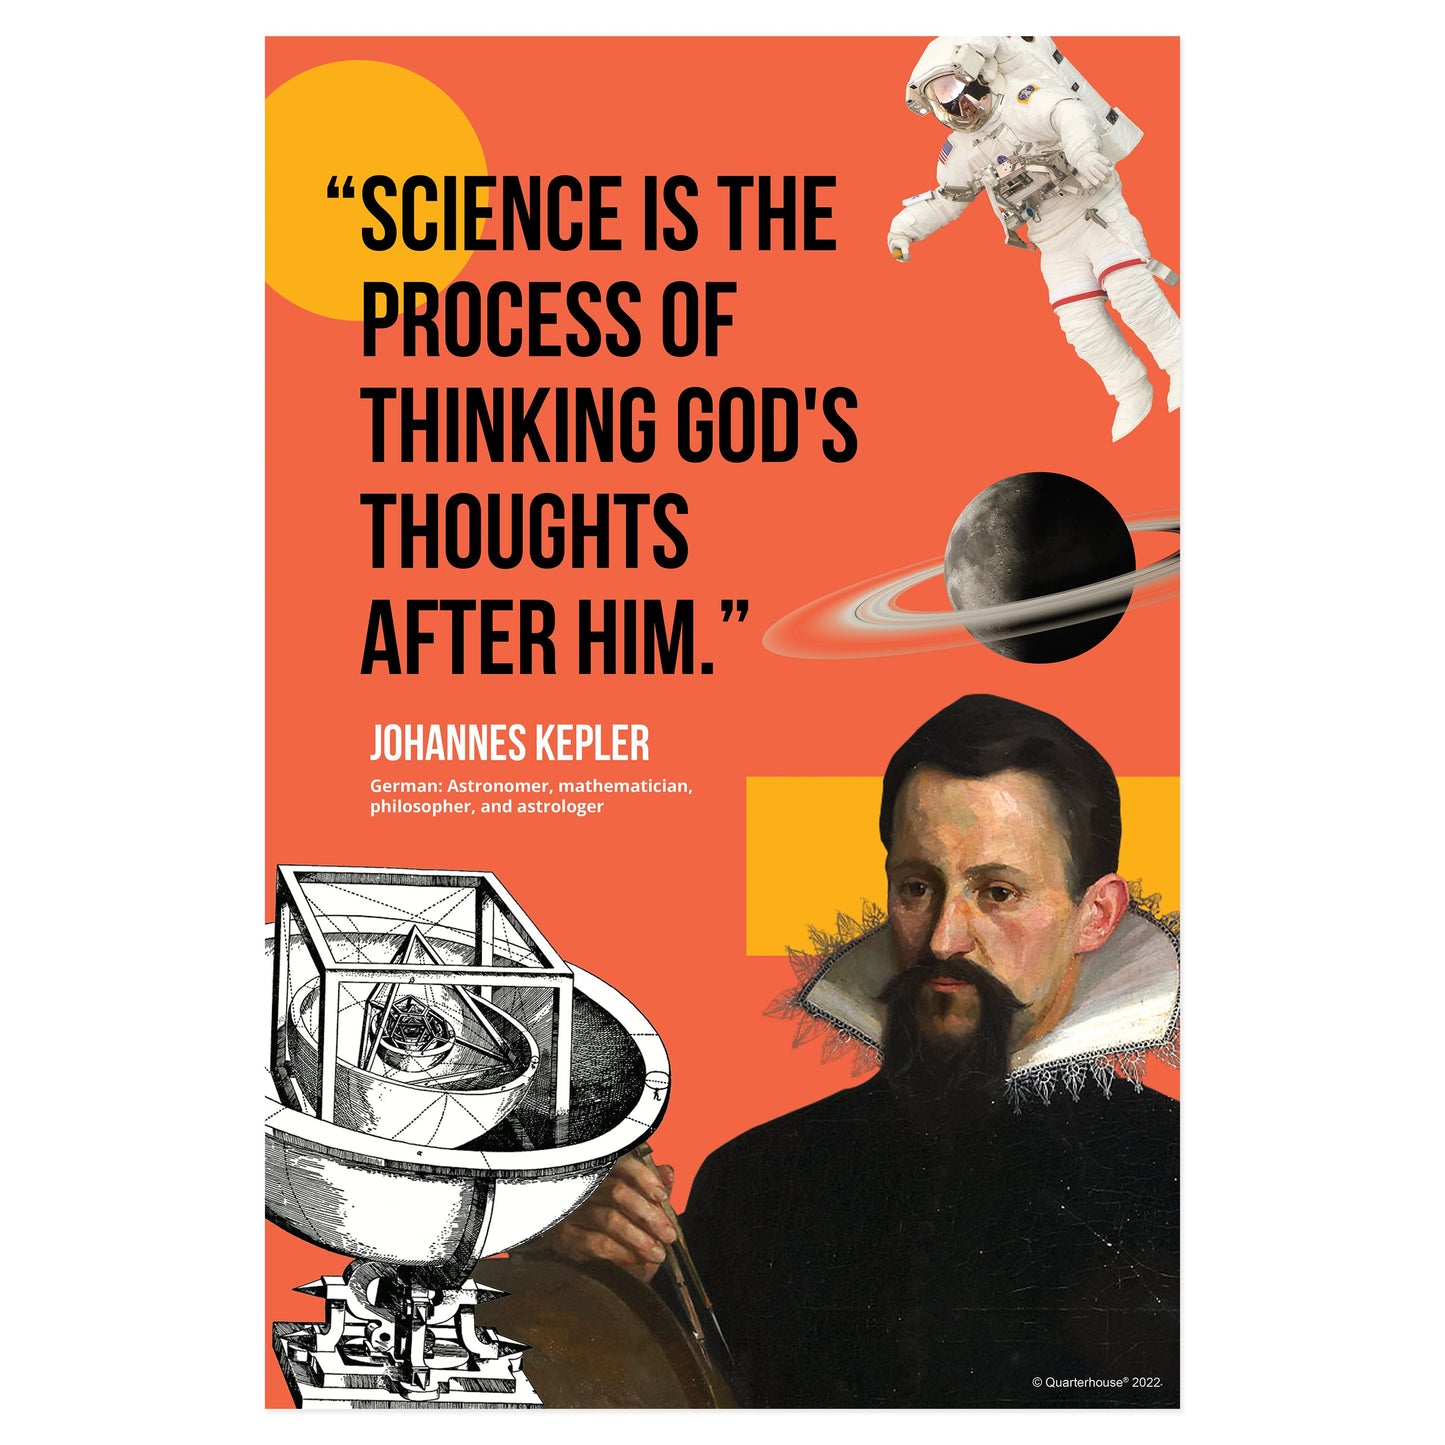 Quarterhouse STEM Quotables - Johannes Kepler Poster, Science Classroom Materials for Teachers